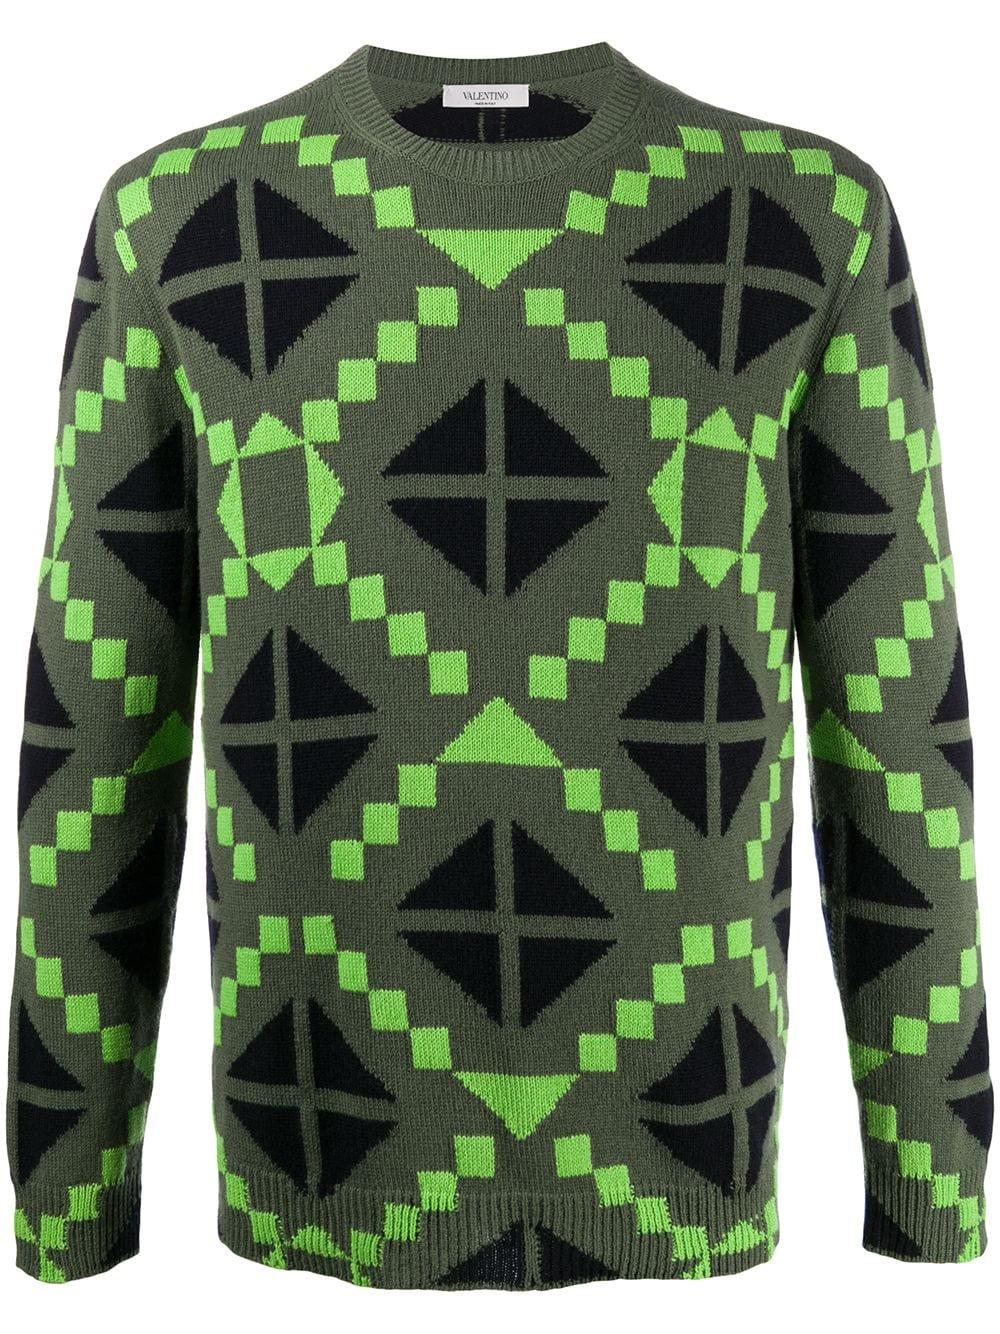 Valentino Cashmere Geometric Print Jumper in Green for Men - Lyst